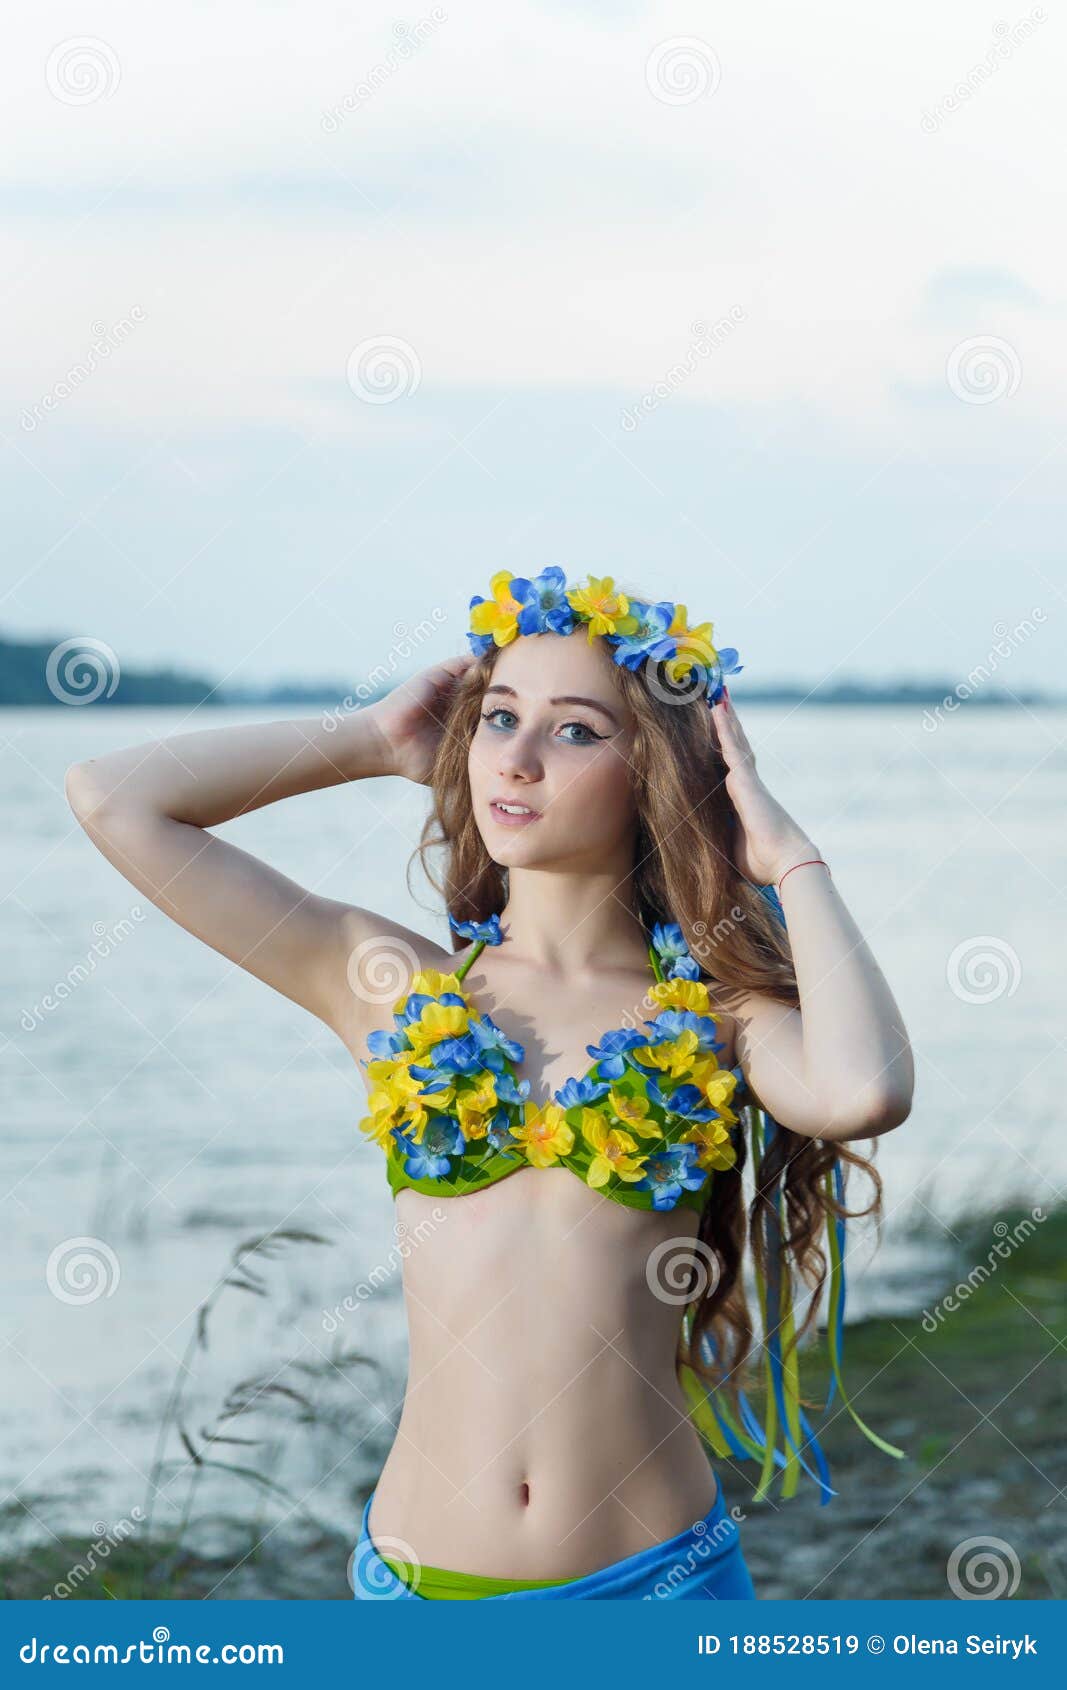 Bikini Ukraine